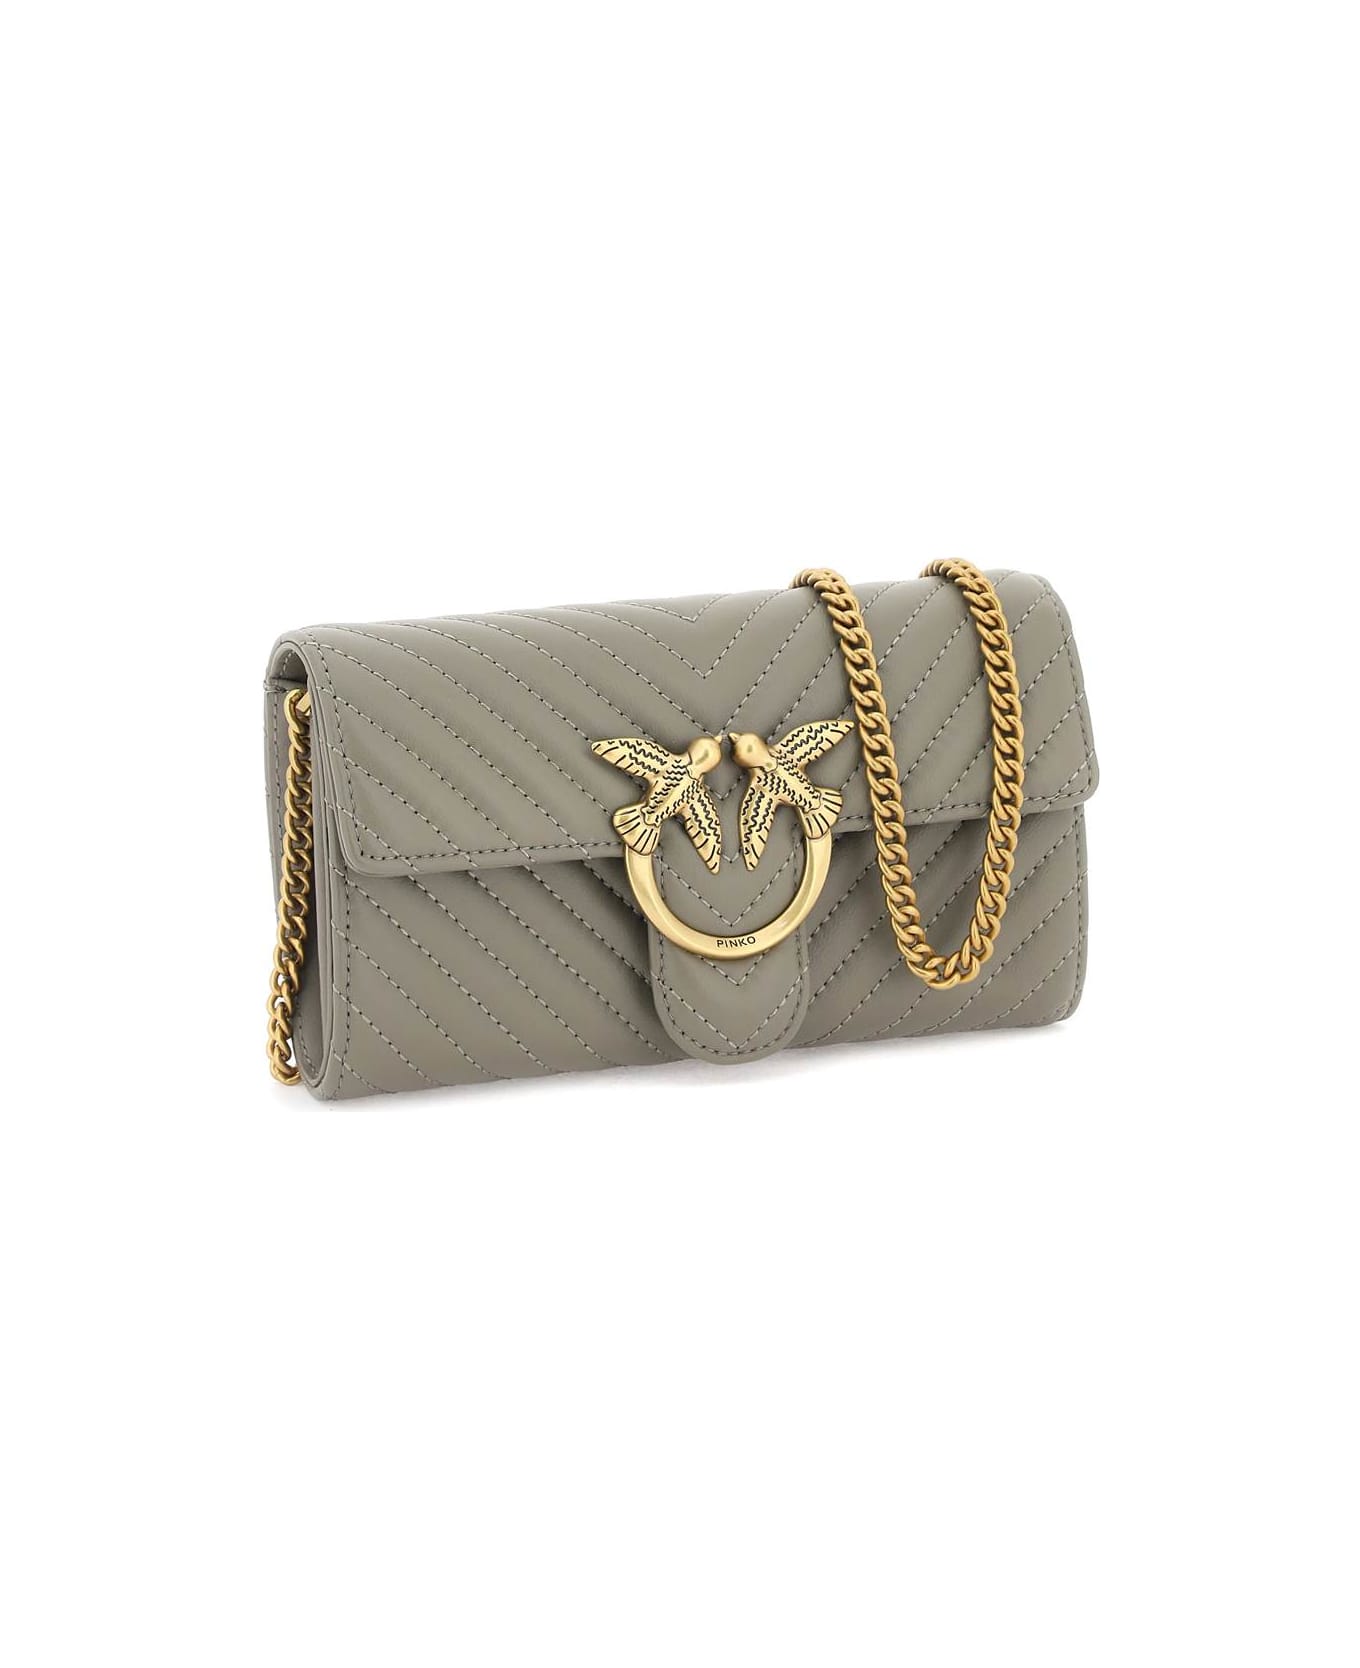 Pinko Love Bag Chevron Crossbody Bag - NOCE ANTIQUE GOLD (Grey)